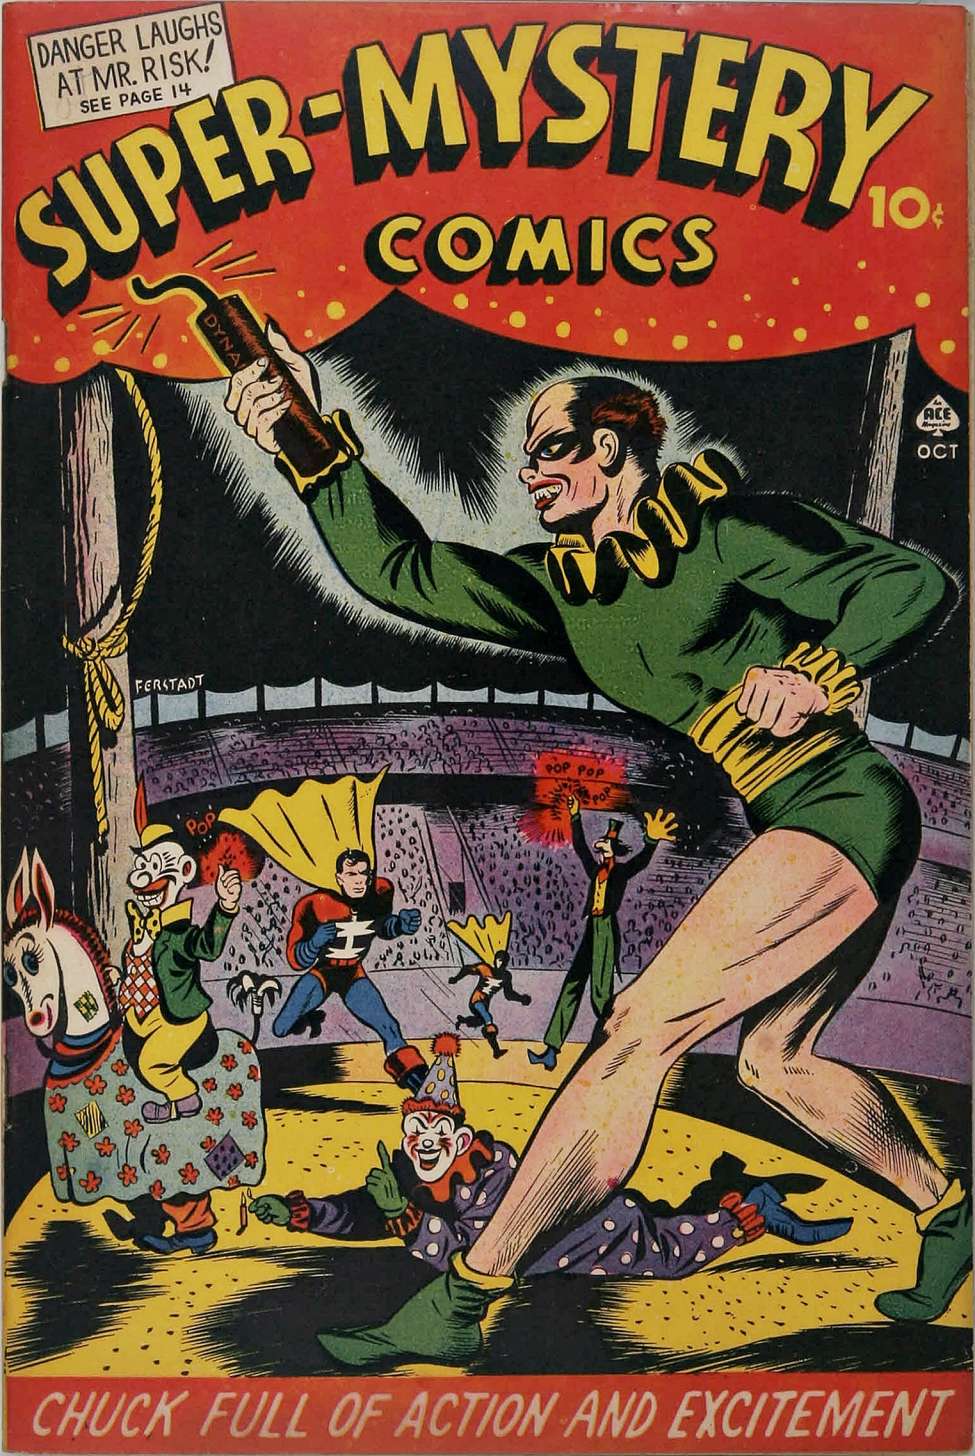 Comic Book Cover For Super-Mystery Comics v4 4 - Version 1